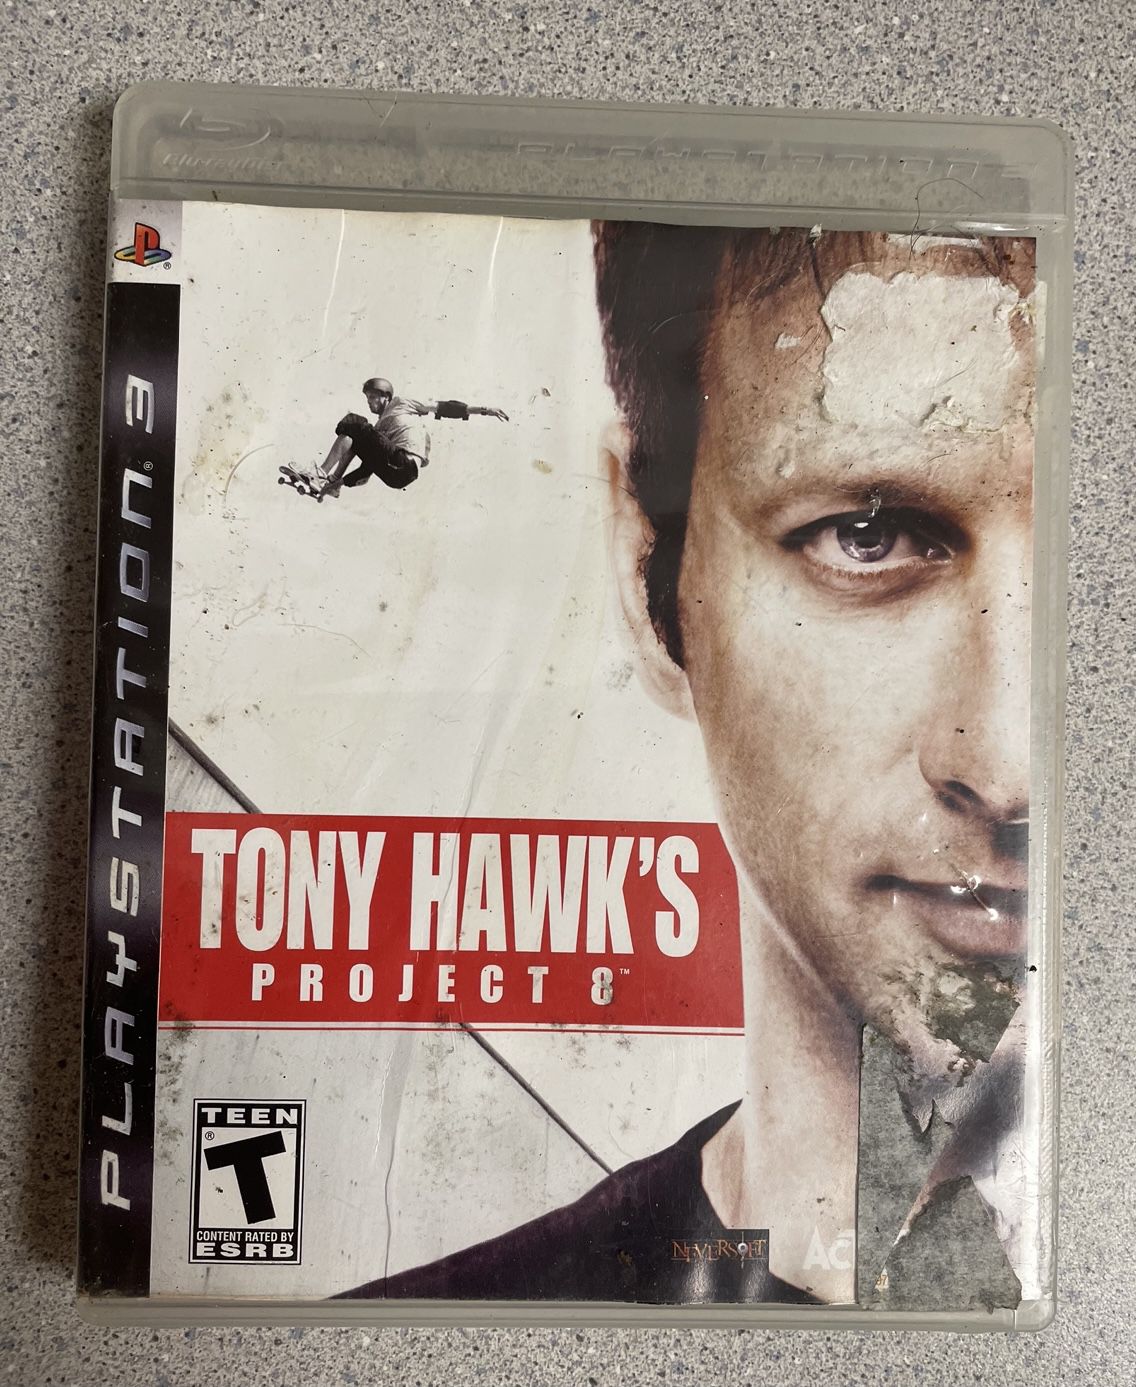 Tony Hawk's Project 8 Sony PlayStation 3 PS3 Game LIKE NEW